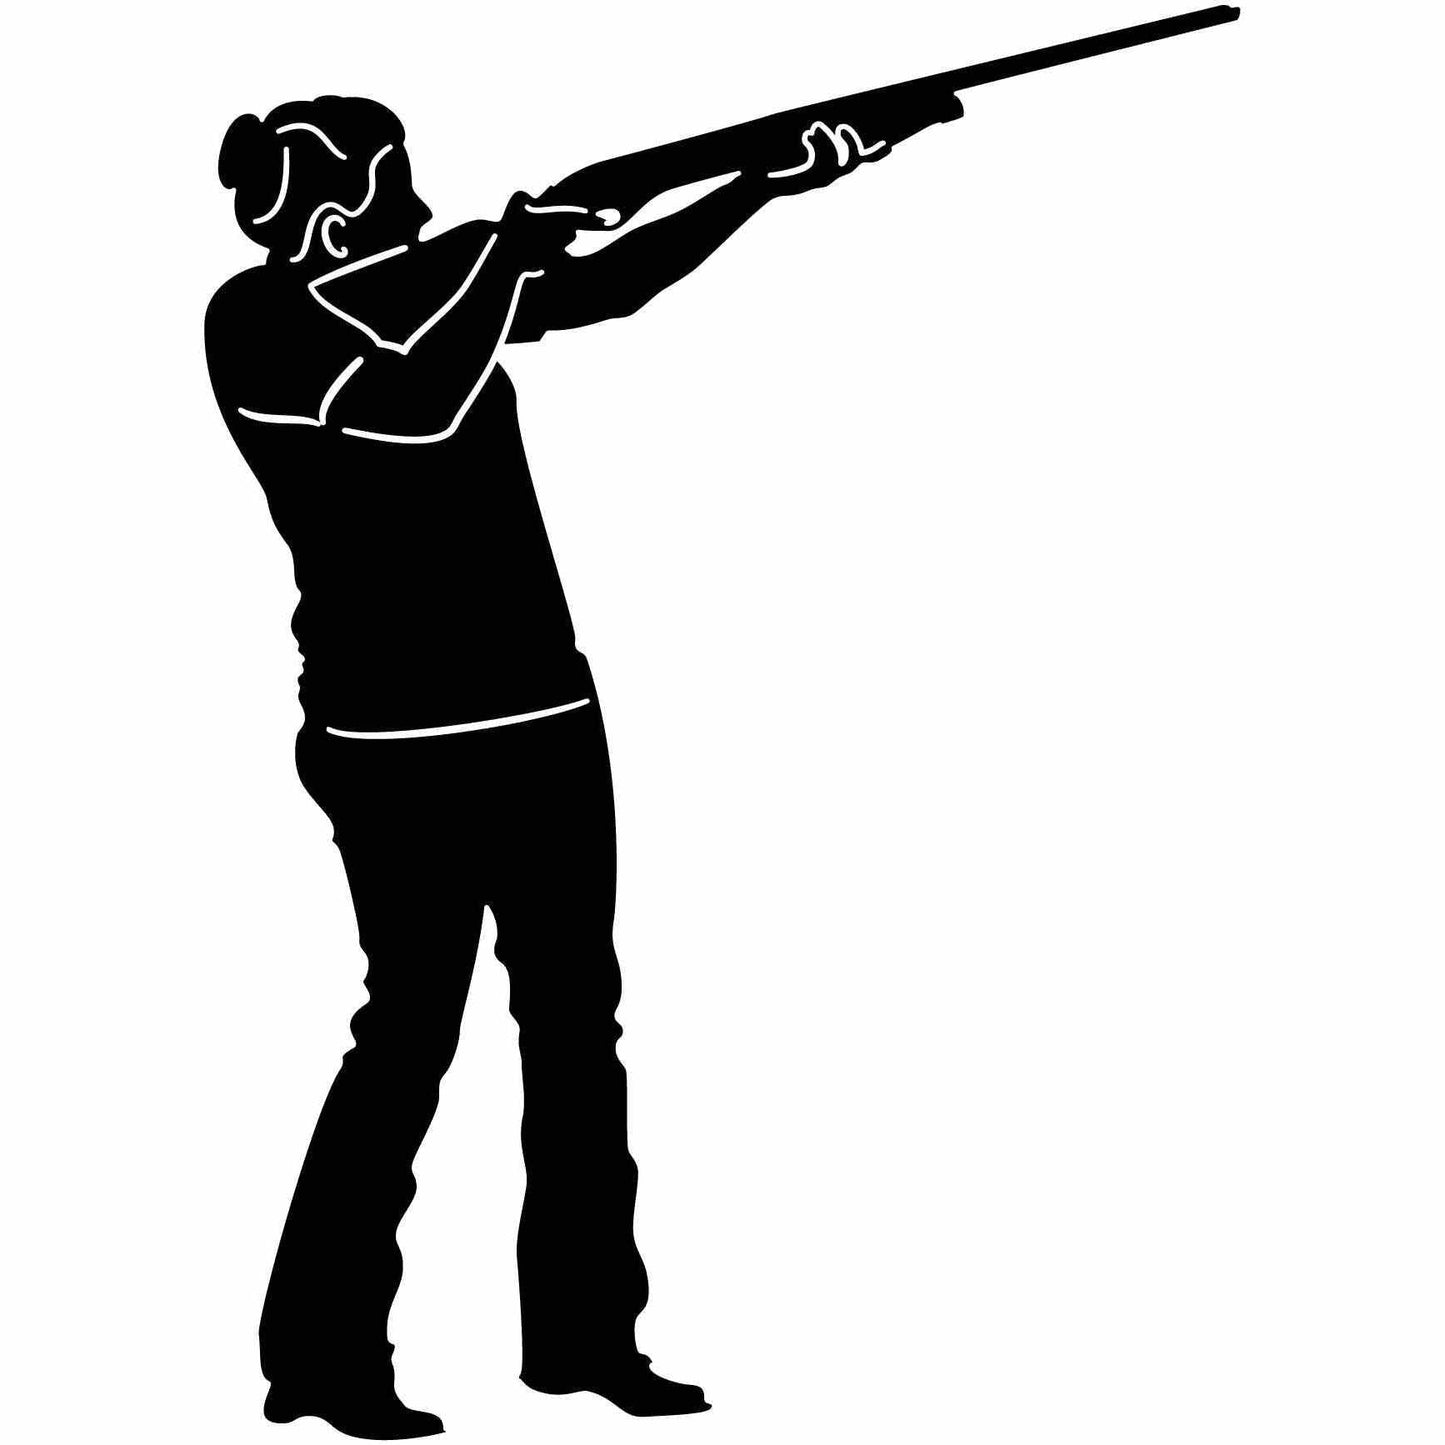 Free Hunting Girl with Gun-DXFforCNC.com-DXF Files cut ready cnc machines